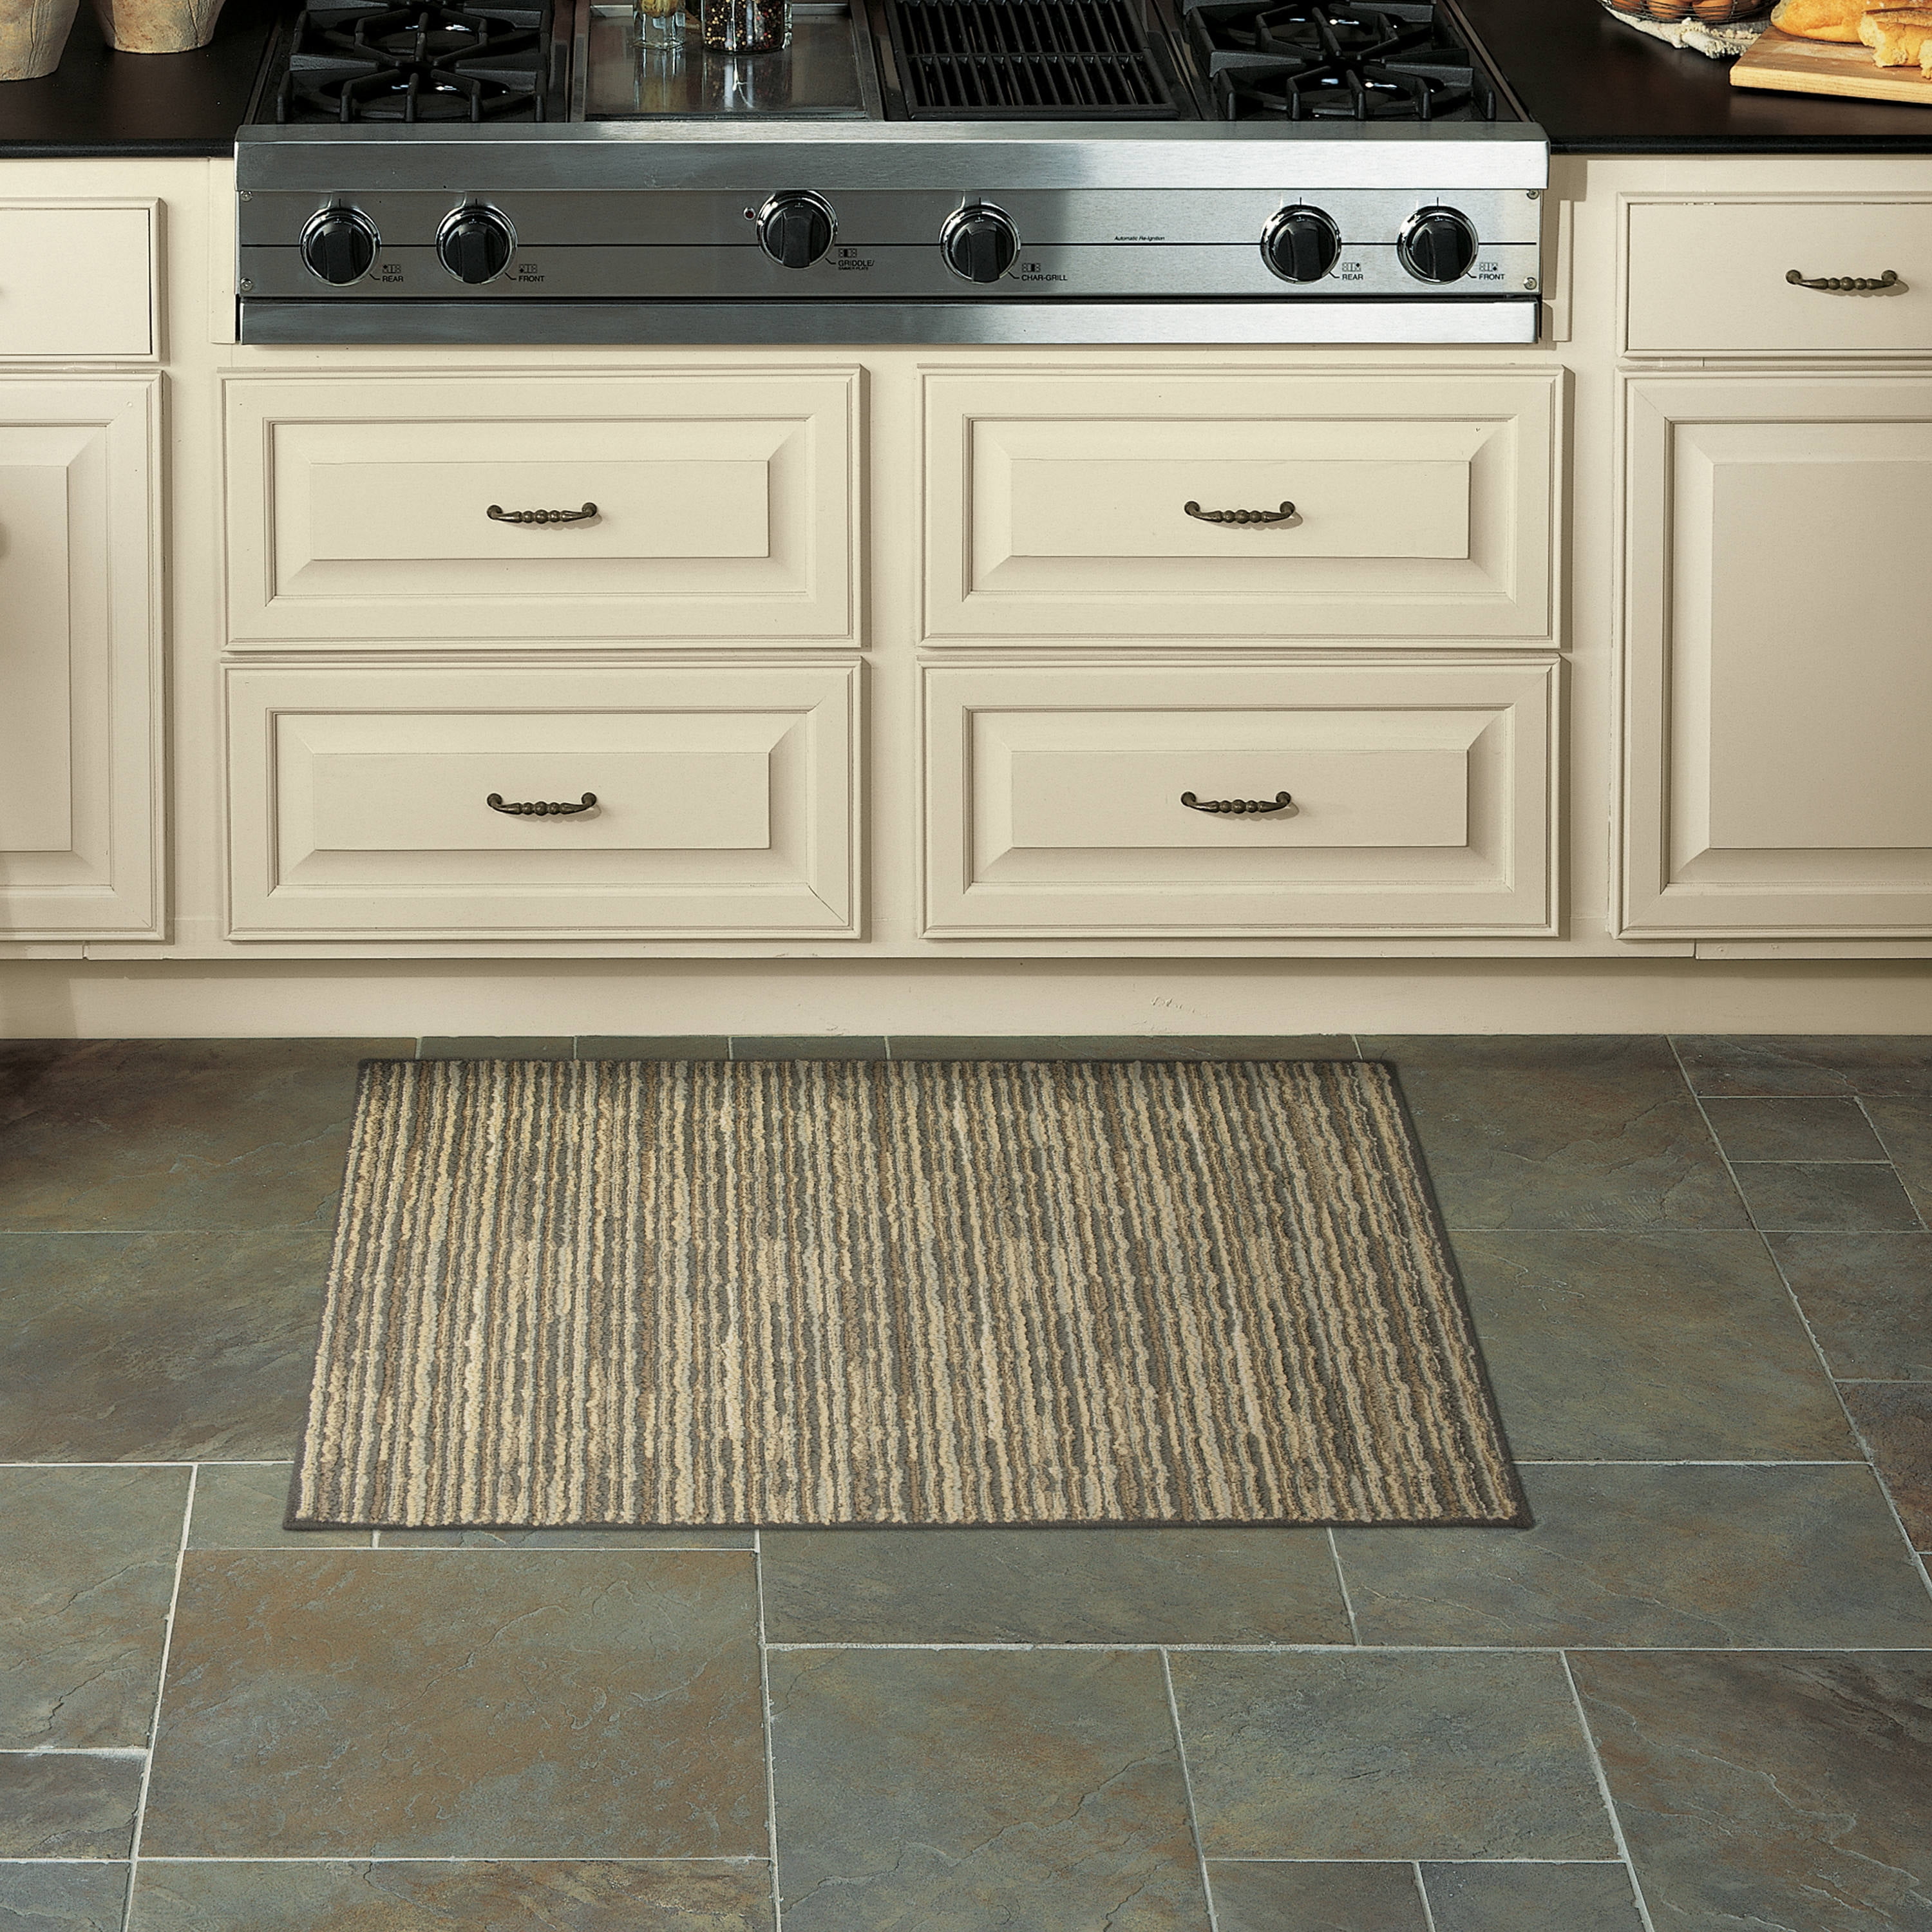 Mohawk Home Dri-Pro Fade Tiles Anti-Fatigue 20x42 Kitchen Mat, Color:  Gray Dlx - JCPenney